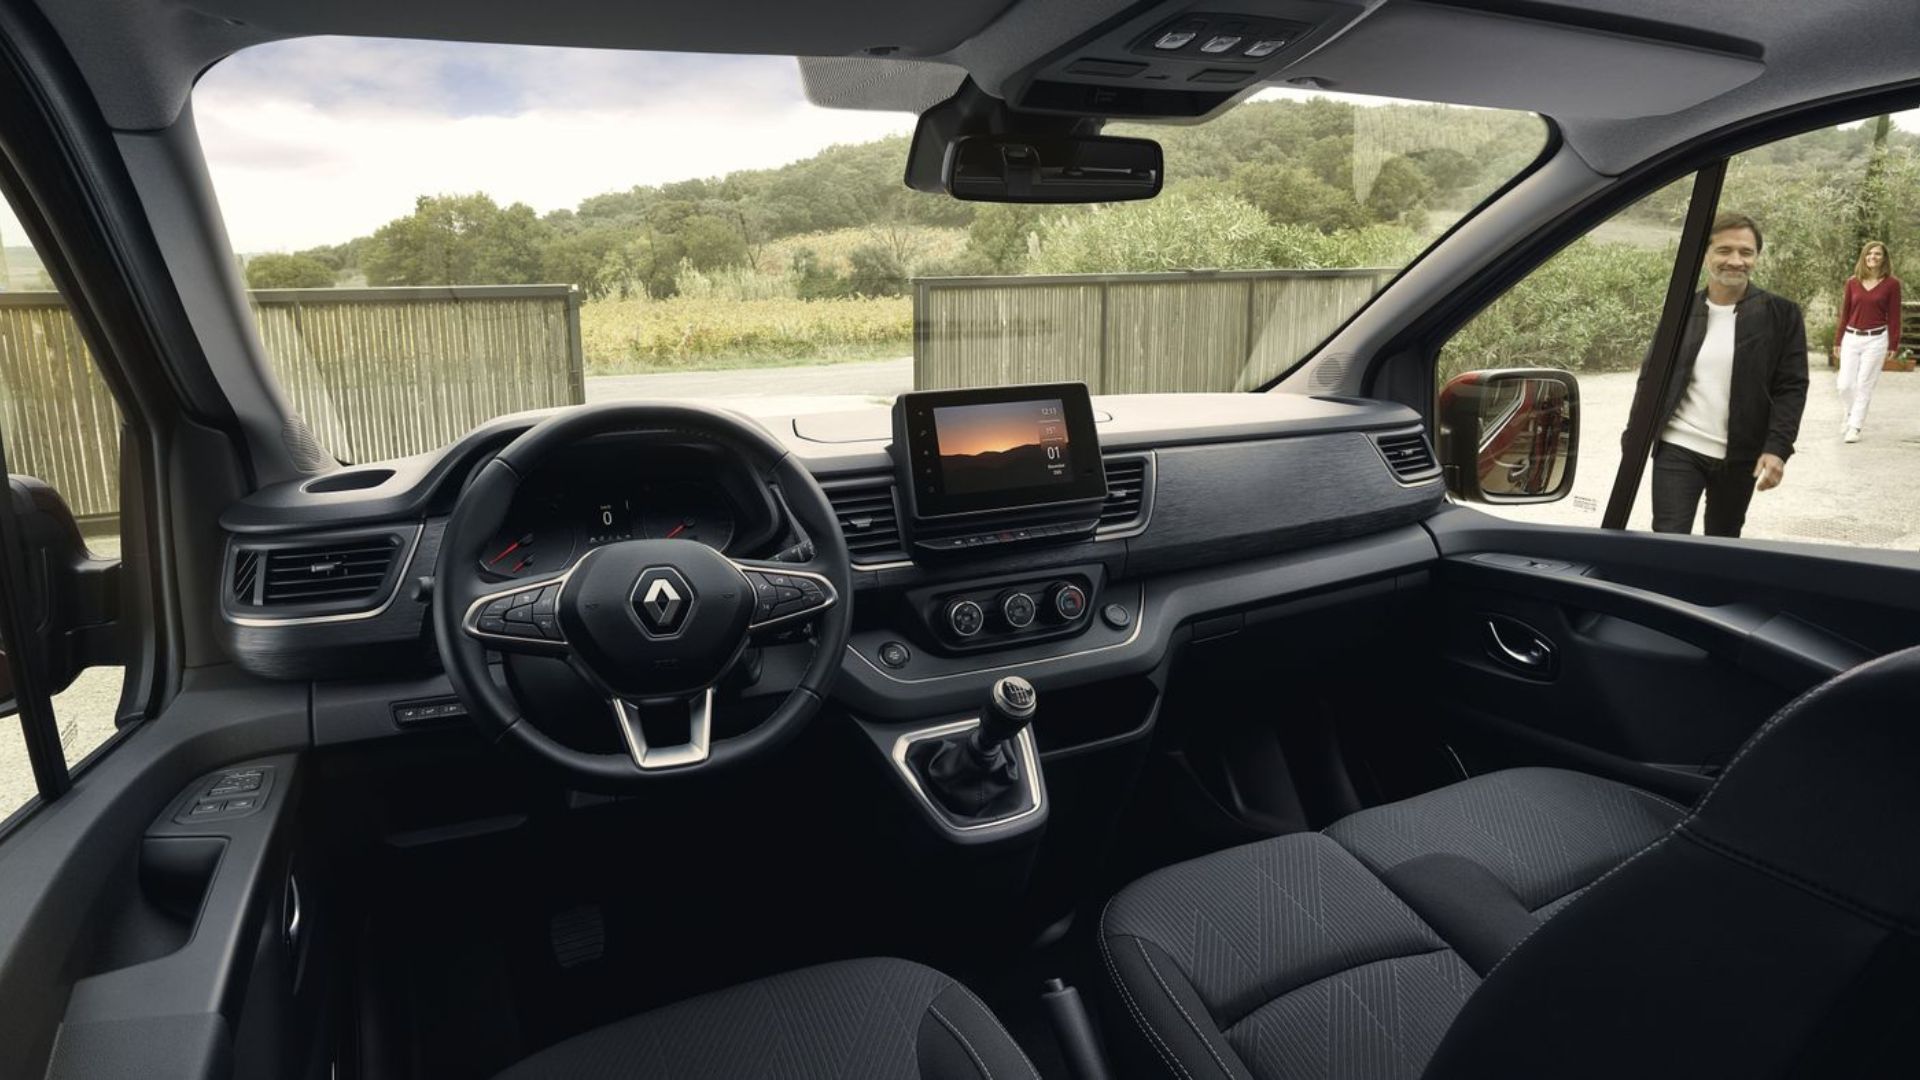 Renault Trafic Combi: Ένα σαλόνι σε τροχούς